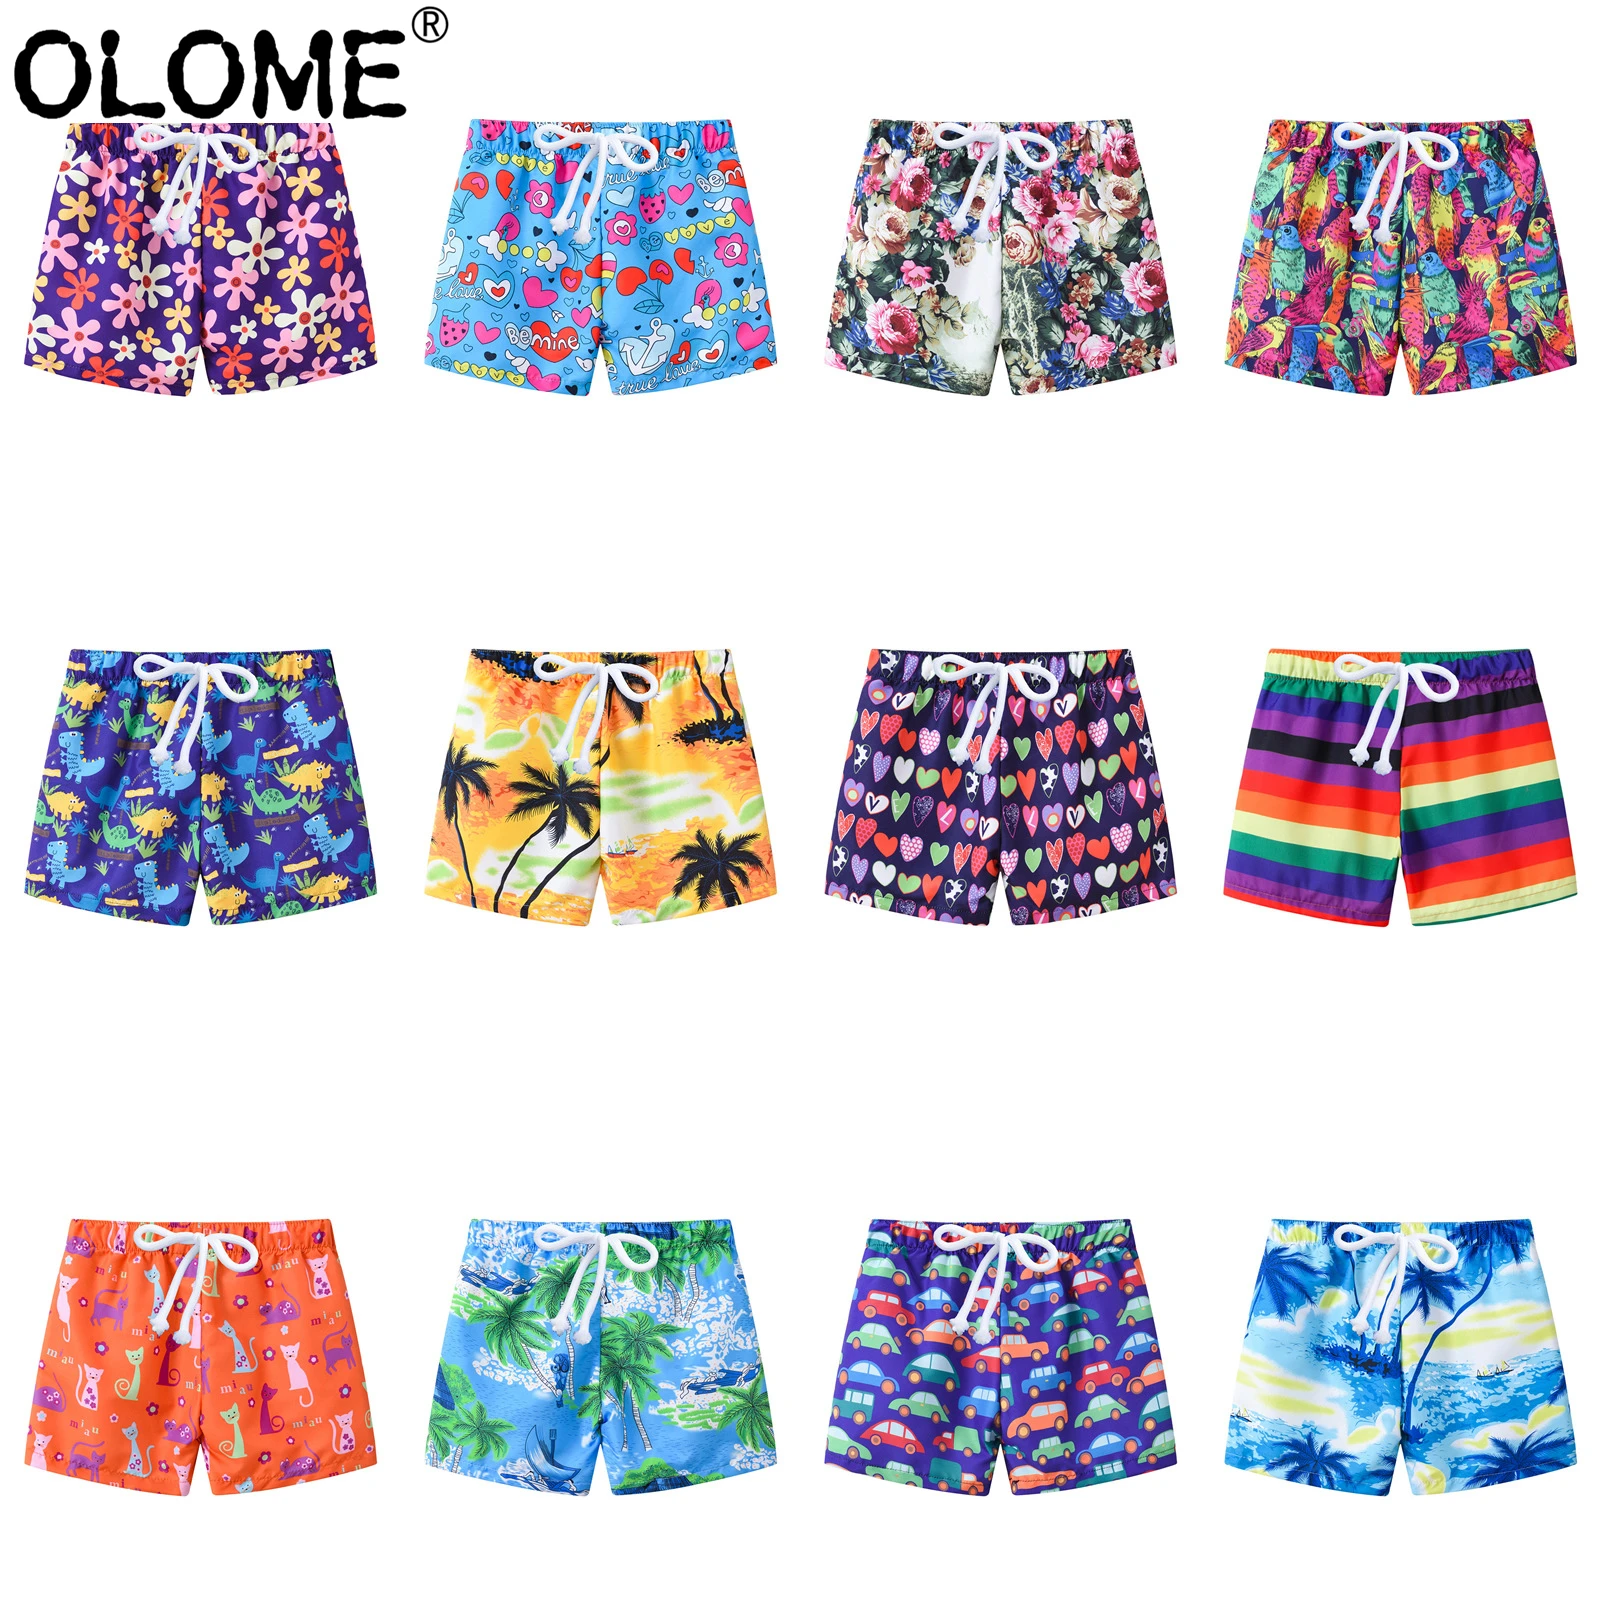 

OLOME Patterned Kid Boys Board Shorts Summer Children Short Pants Casual Toddler Beach Shorts Unisex 2-7 Years Swim shorts